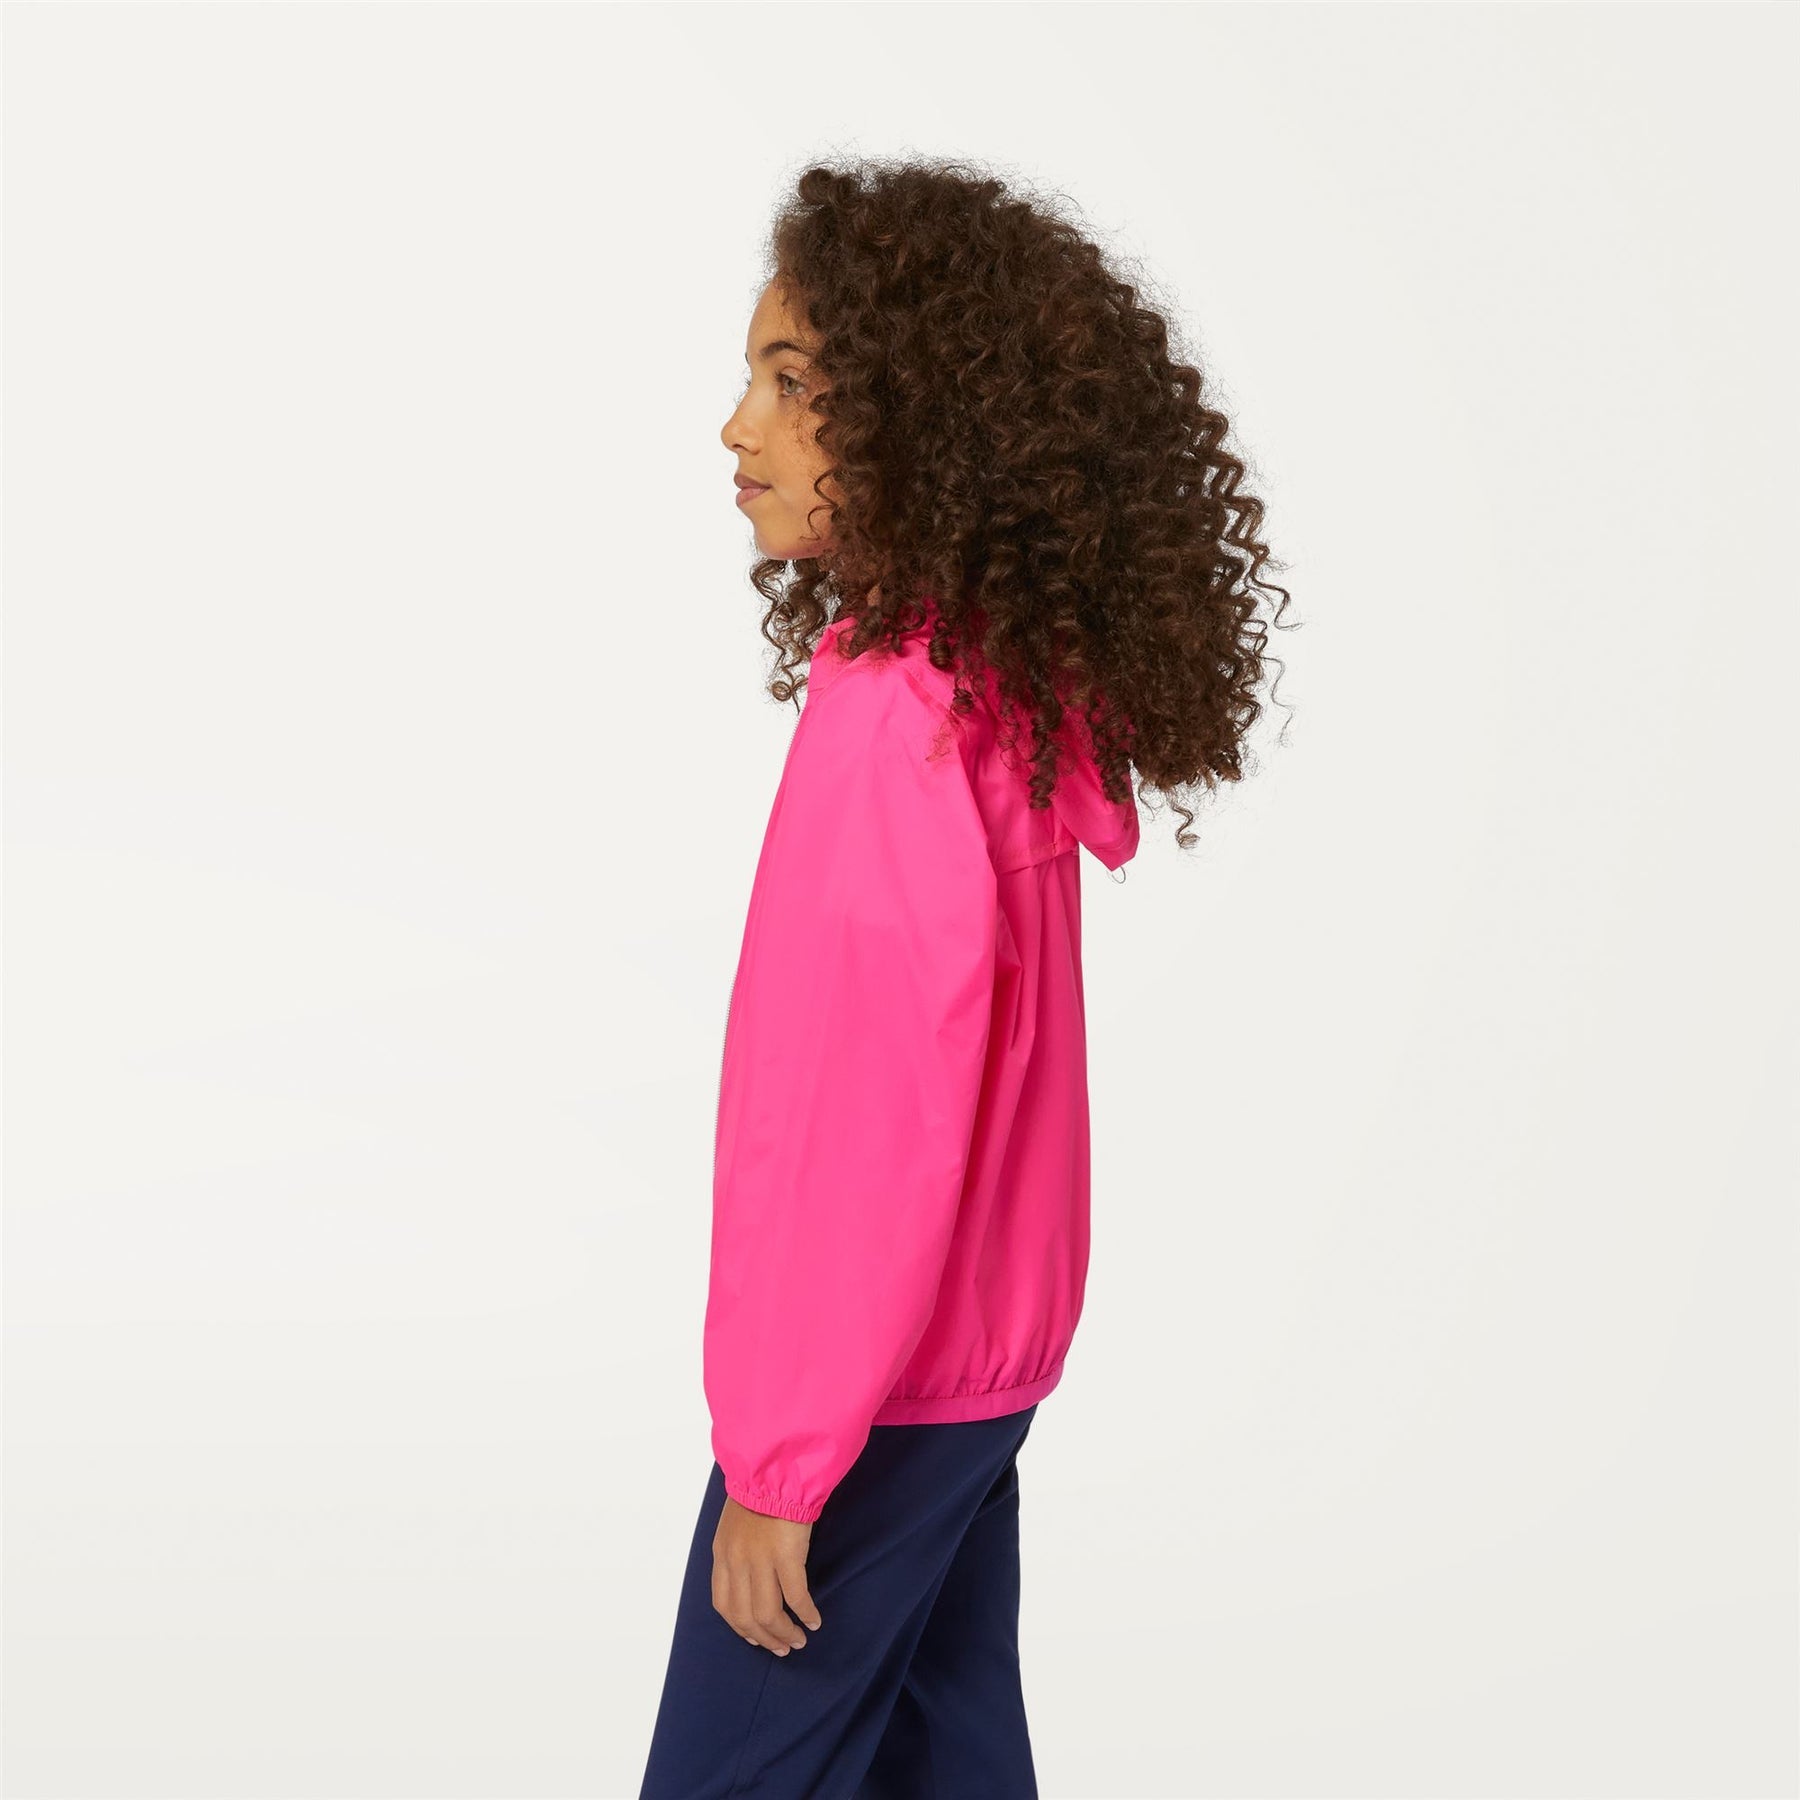 Claude - Kids Packable Full Zip Waterproof Rain Jacket in Pink Intense